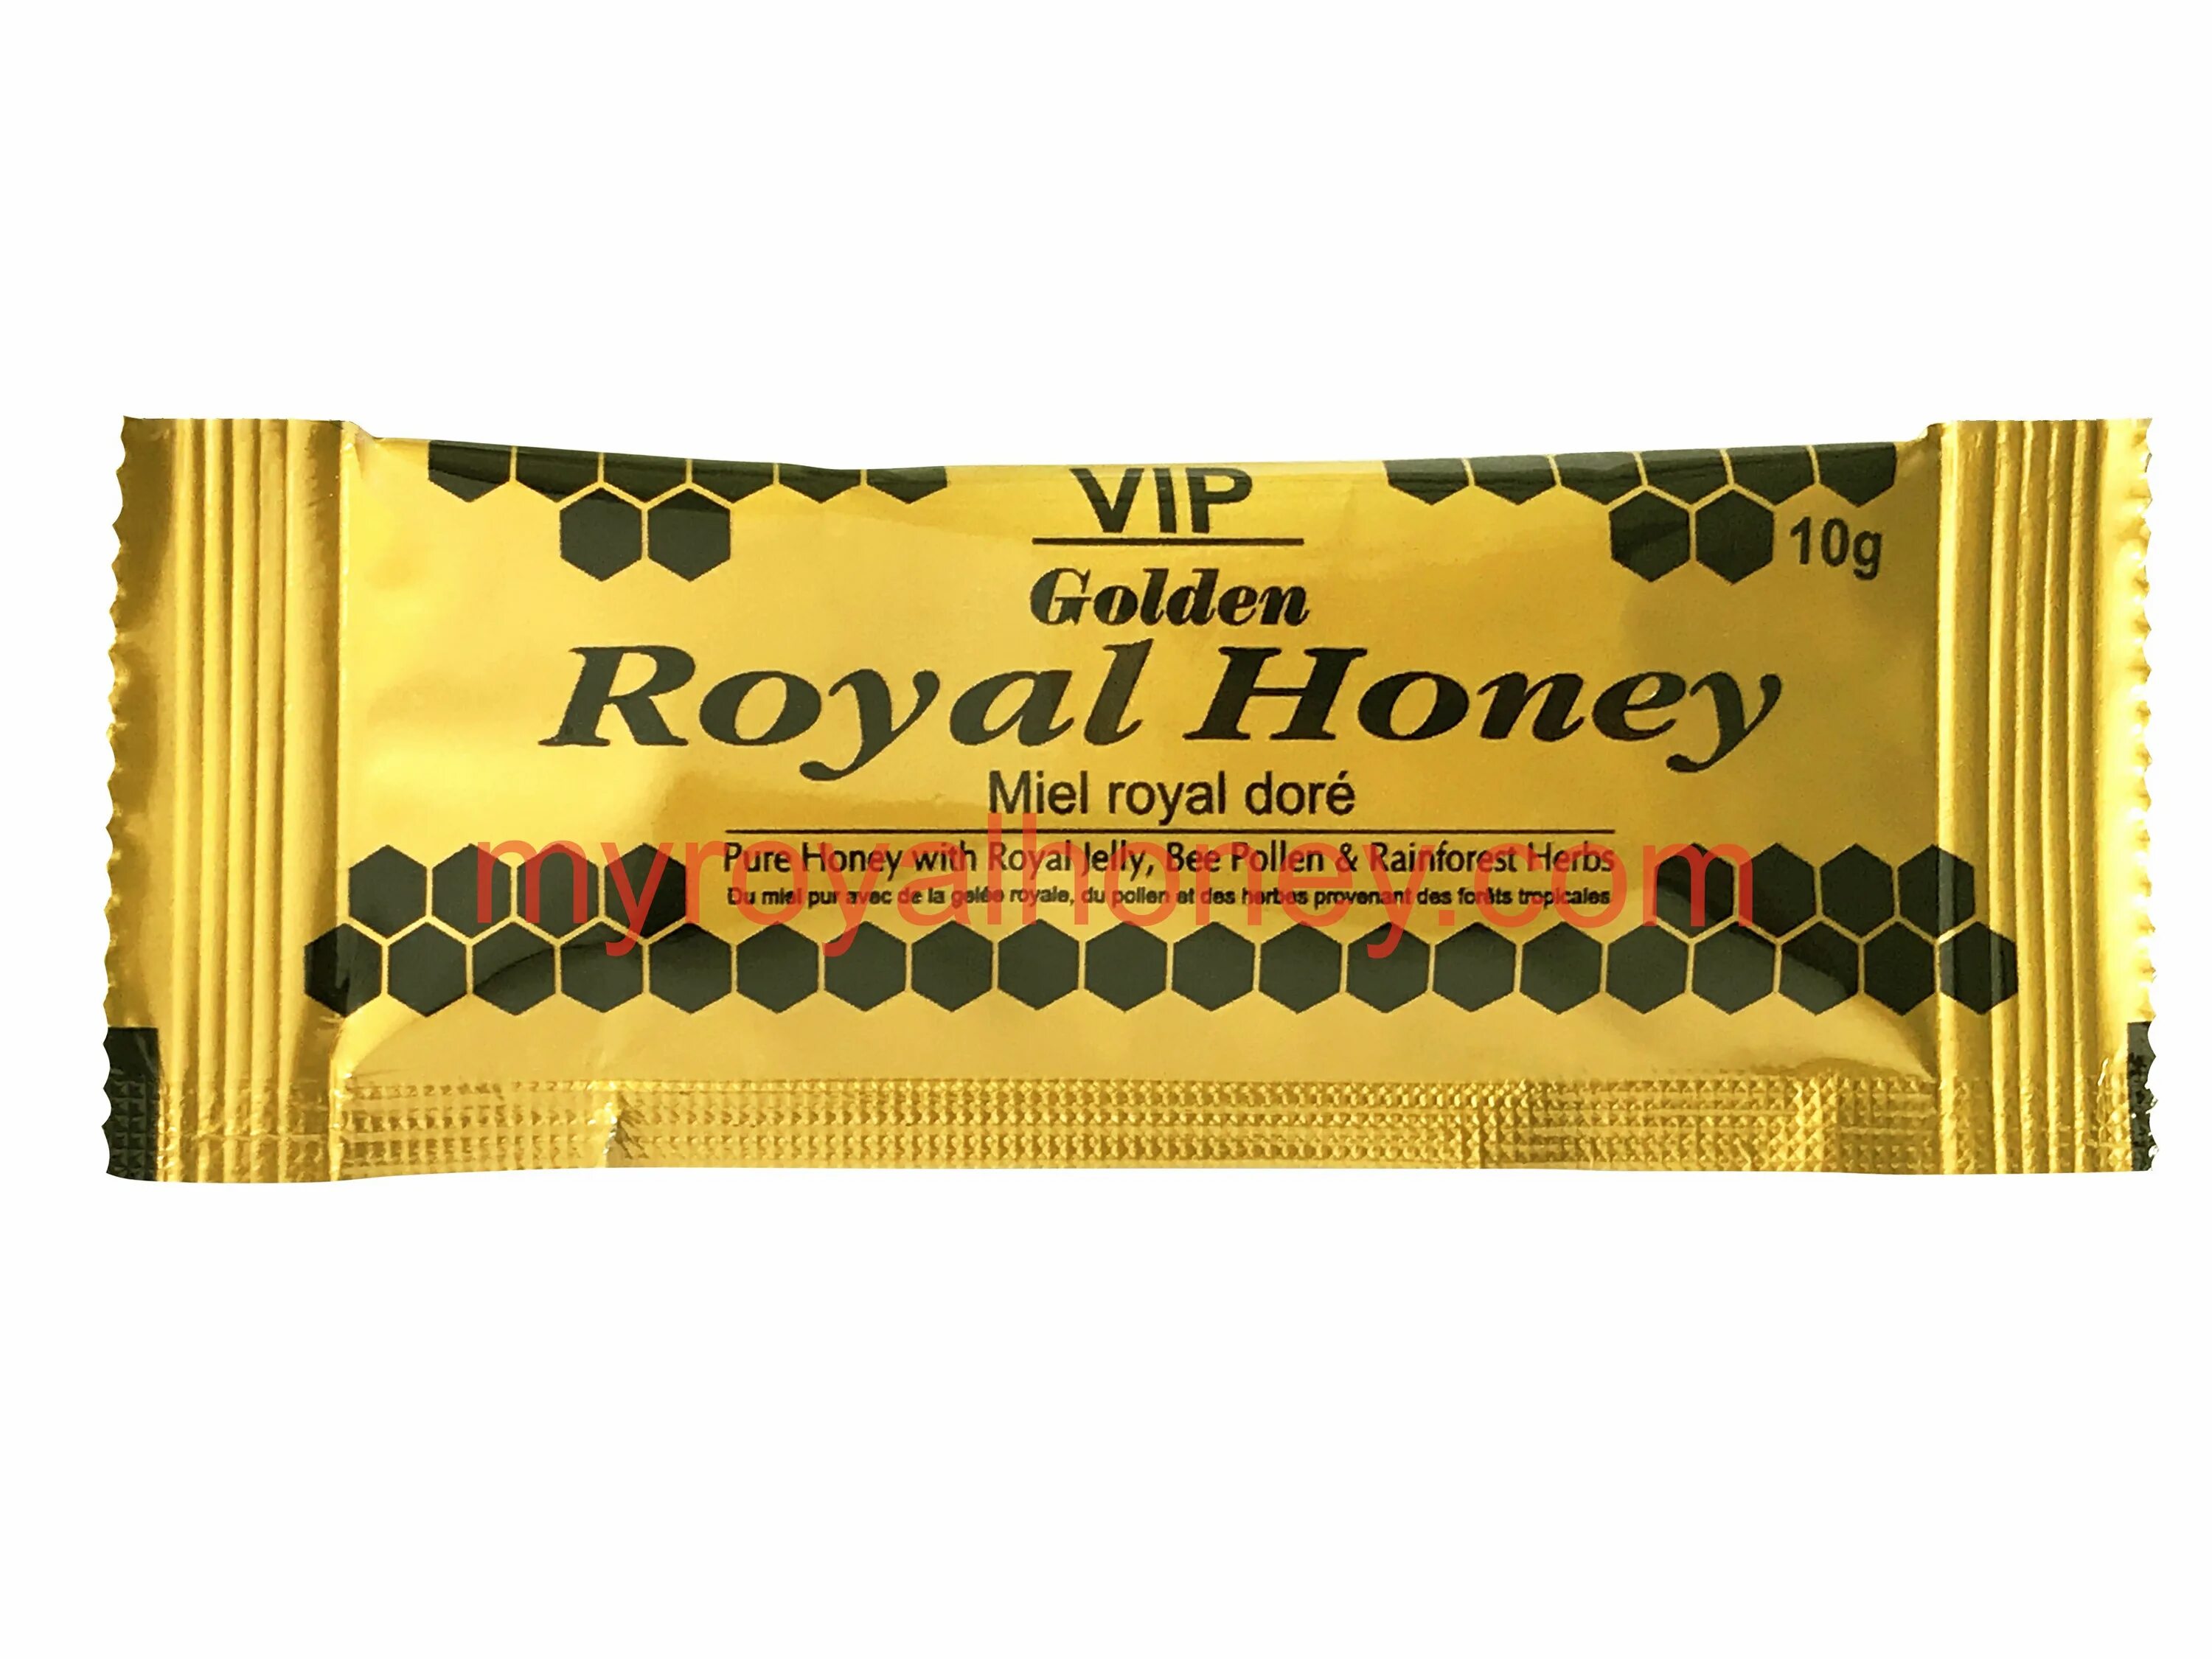 Королевский мёд Royal Honey. Royal Honey VIP Gold. Honey Royal Золотая. Коробка Royal Honey.